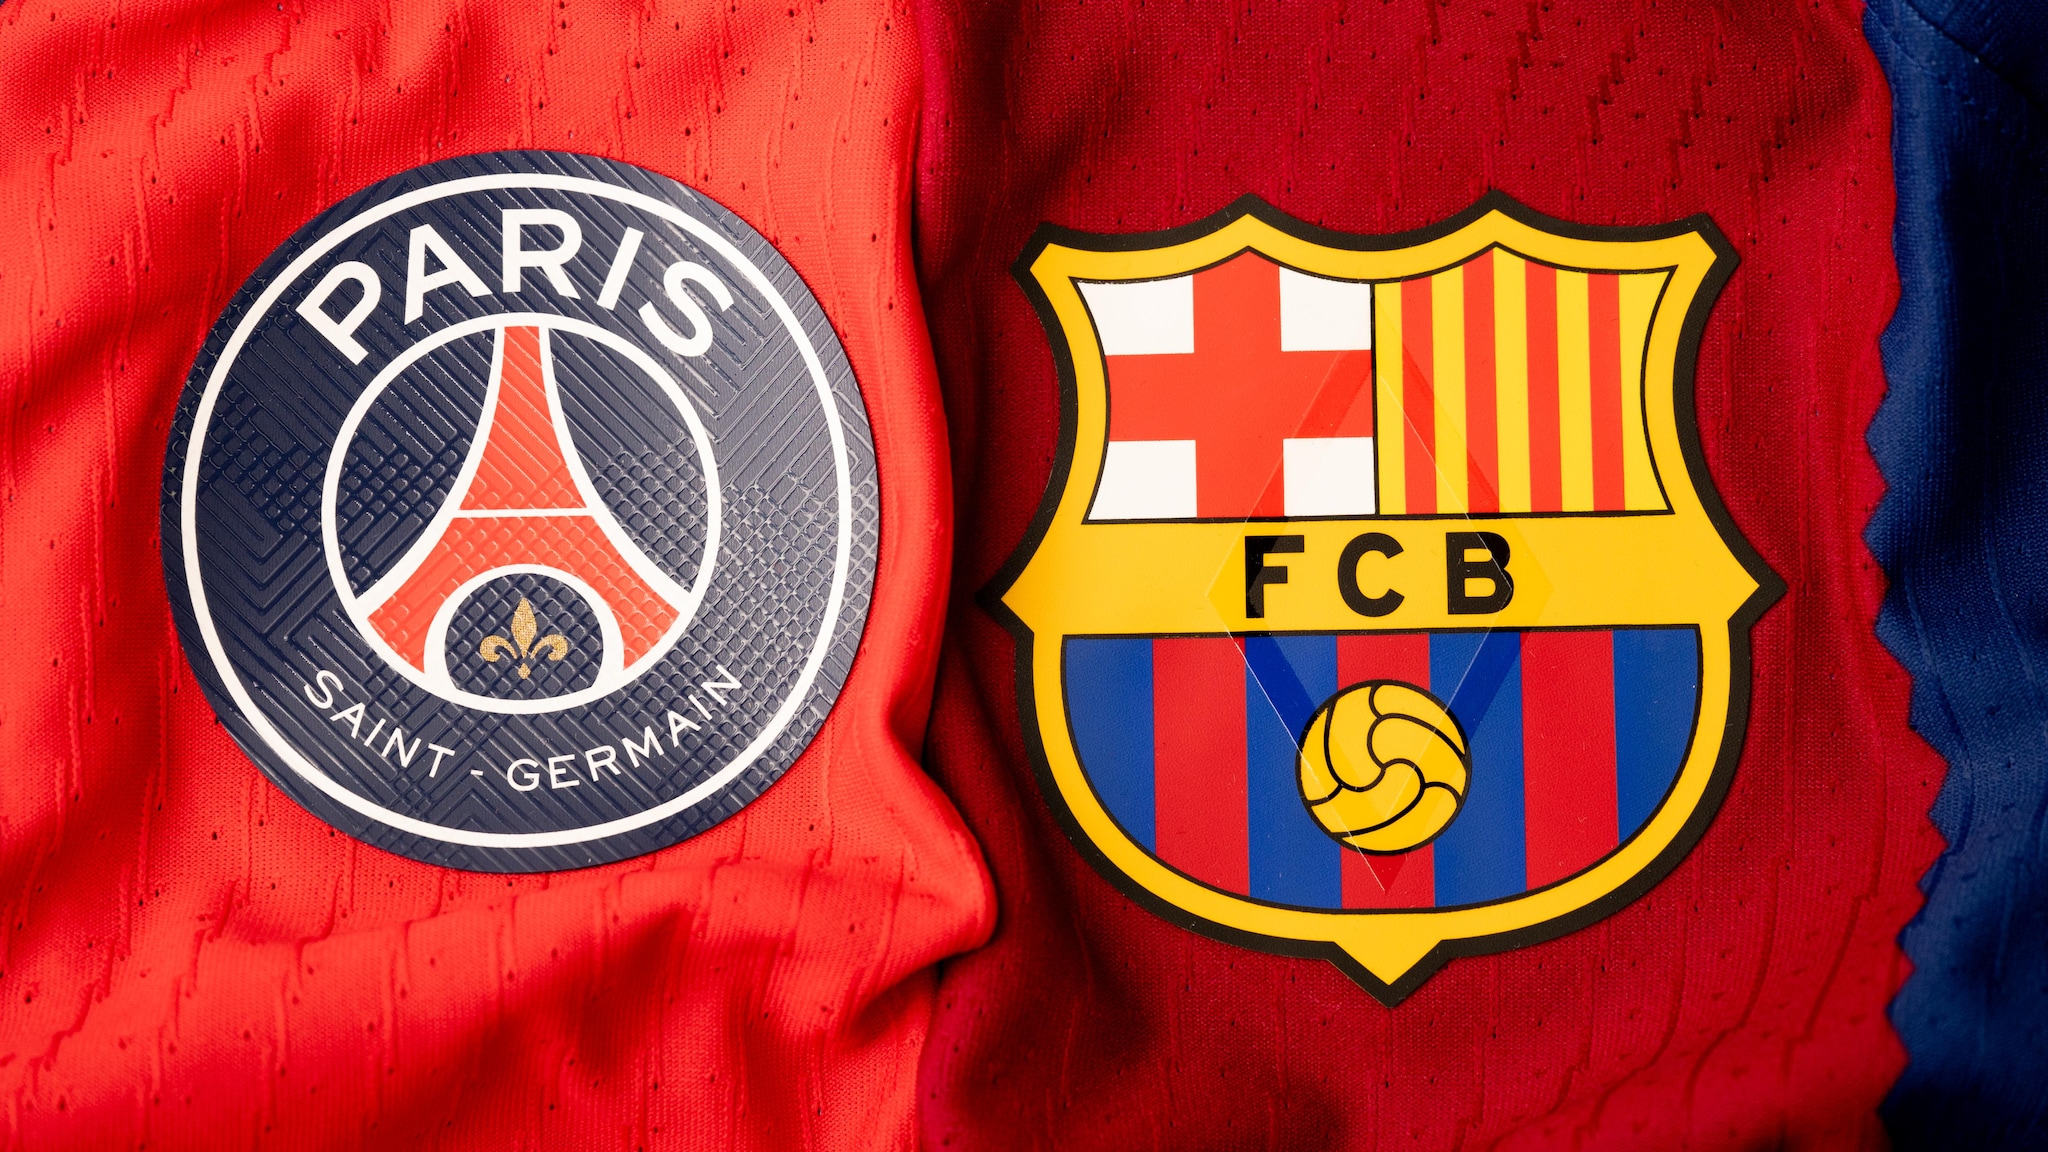 Pratinjau pertandingan Paris vs Barcelona di perempat final Liga Champions: tempat menonton, waktu mulai, dan susunan pemain yang diharapkan |  Liga Champions